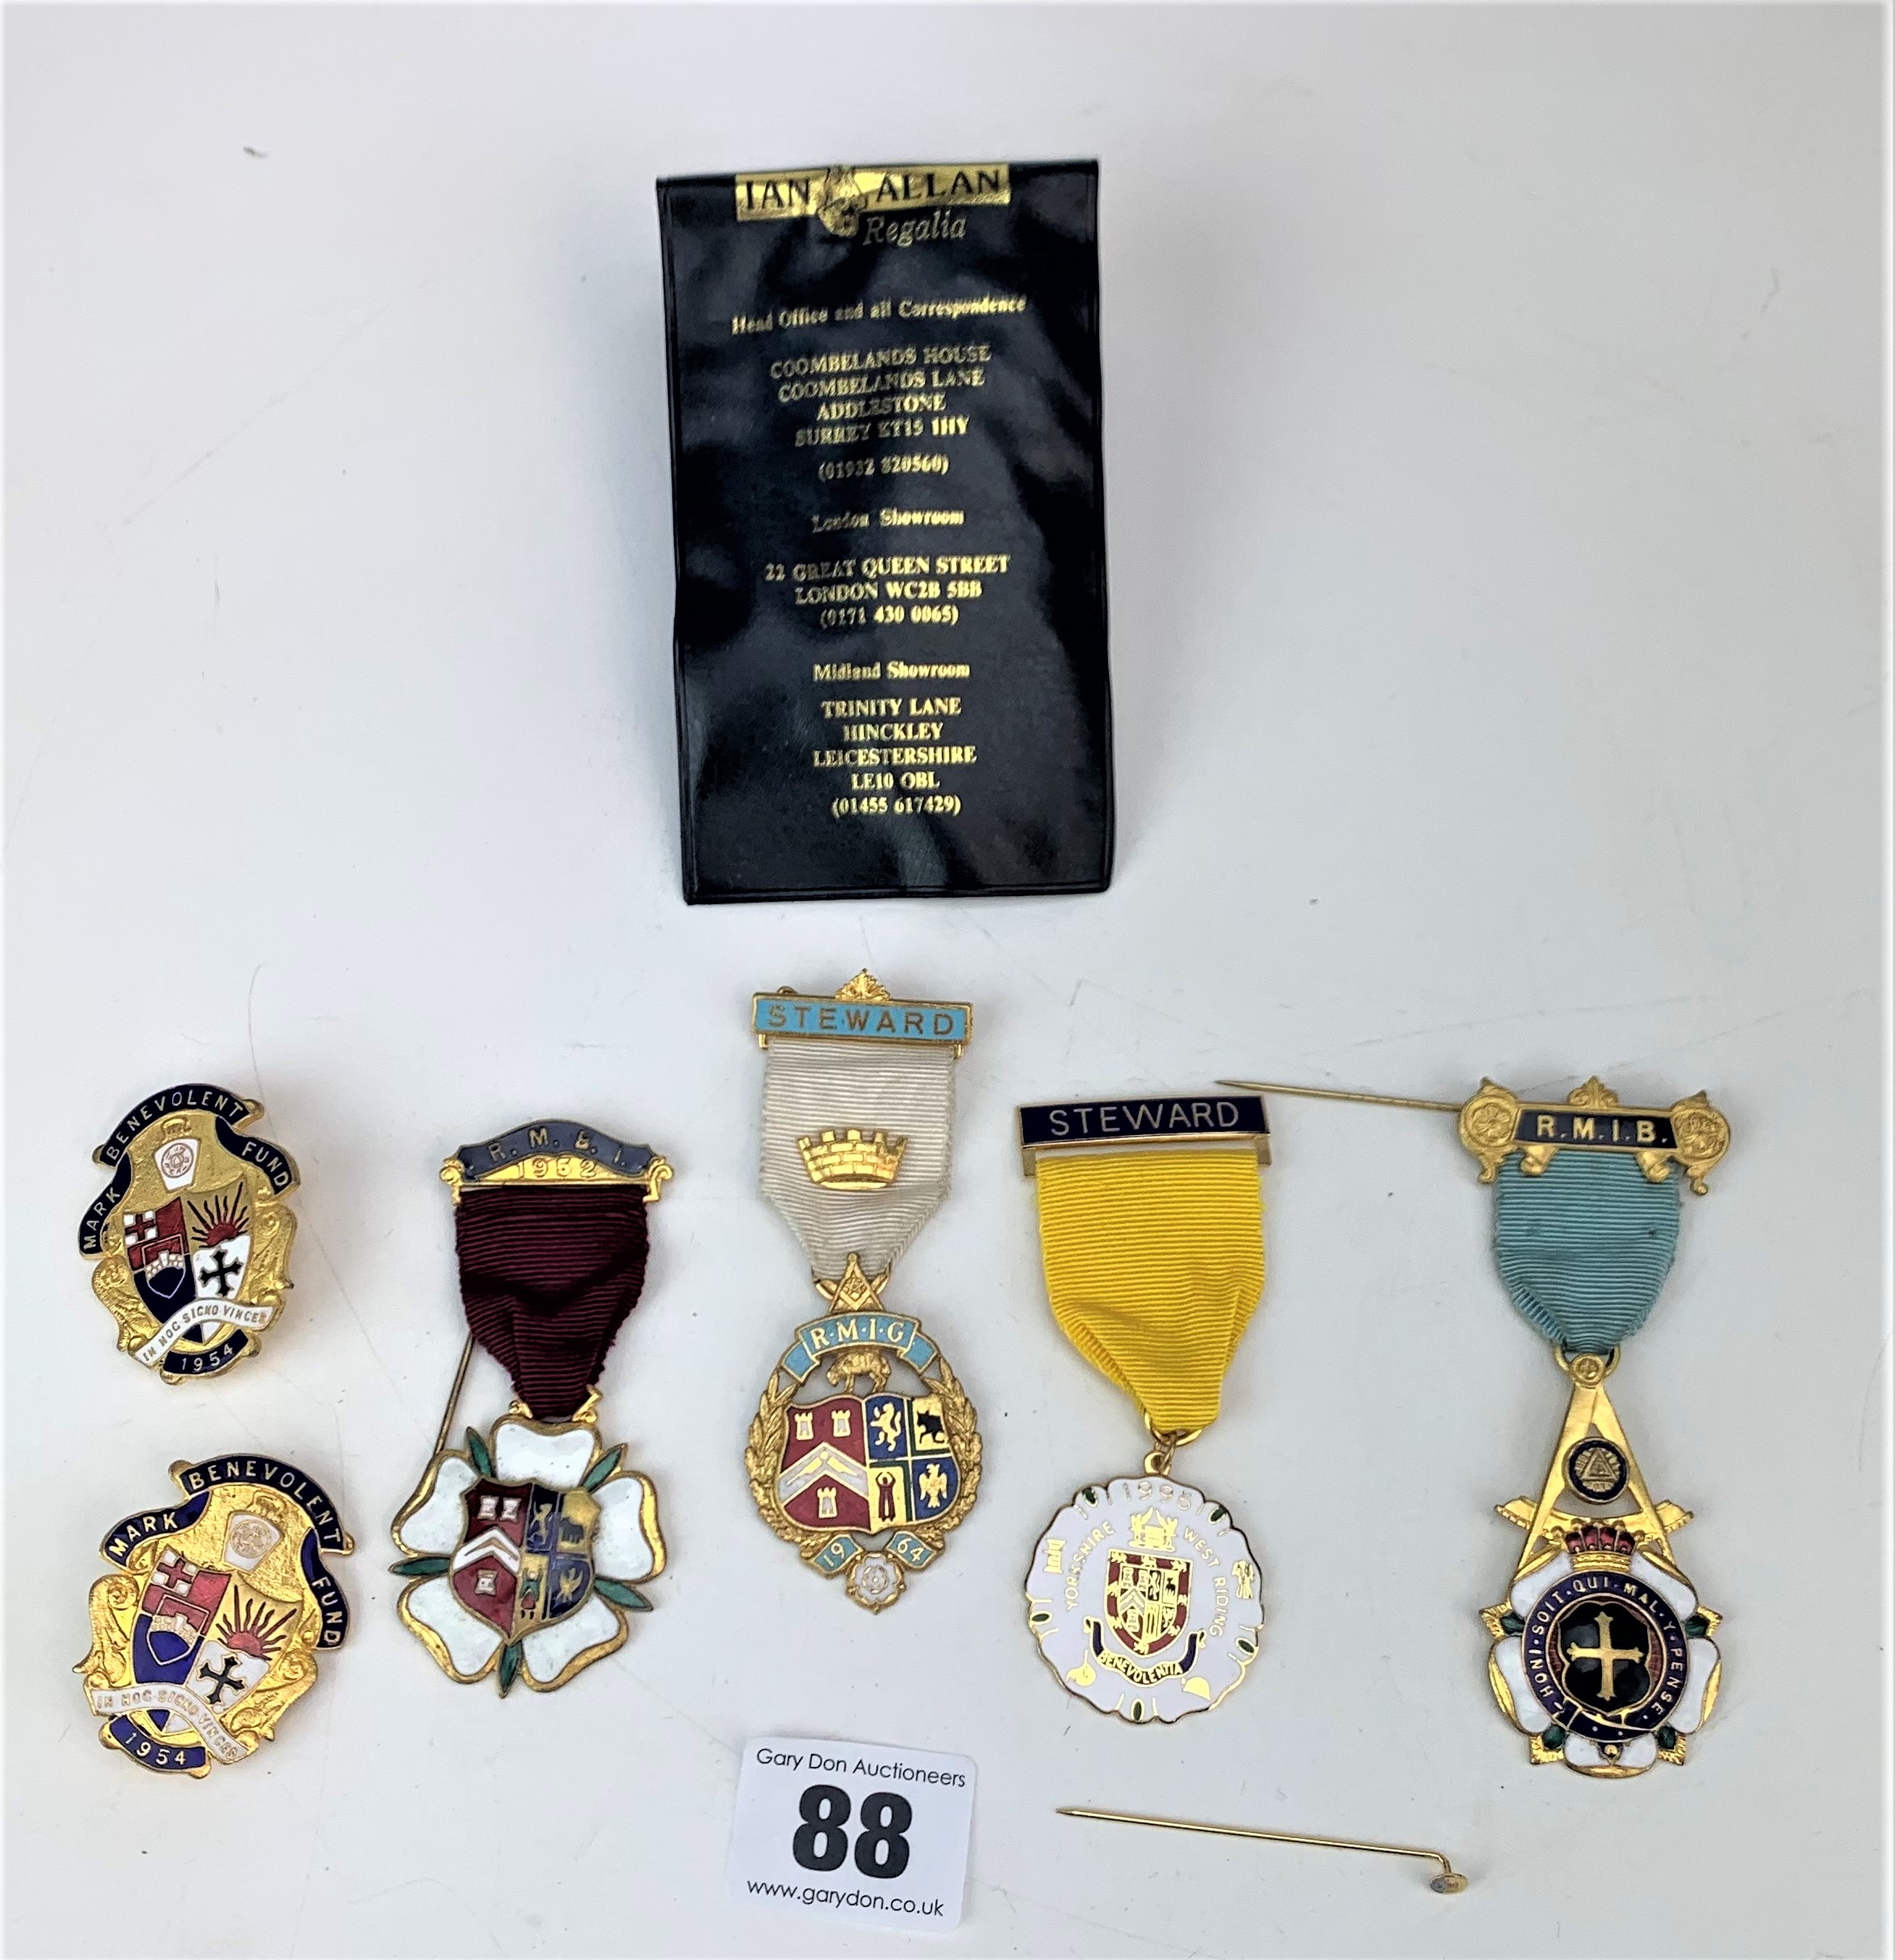 6 enamelled Masonic medals